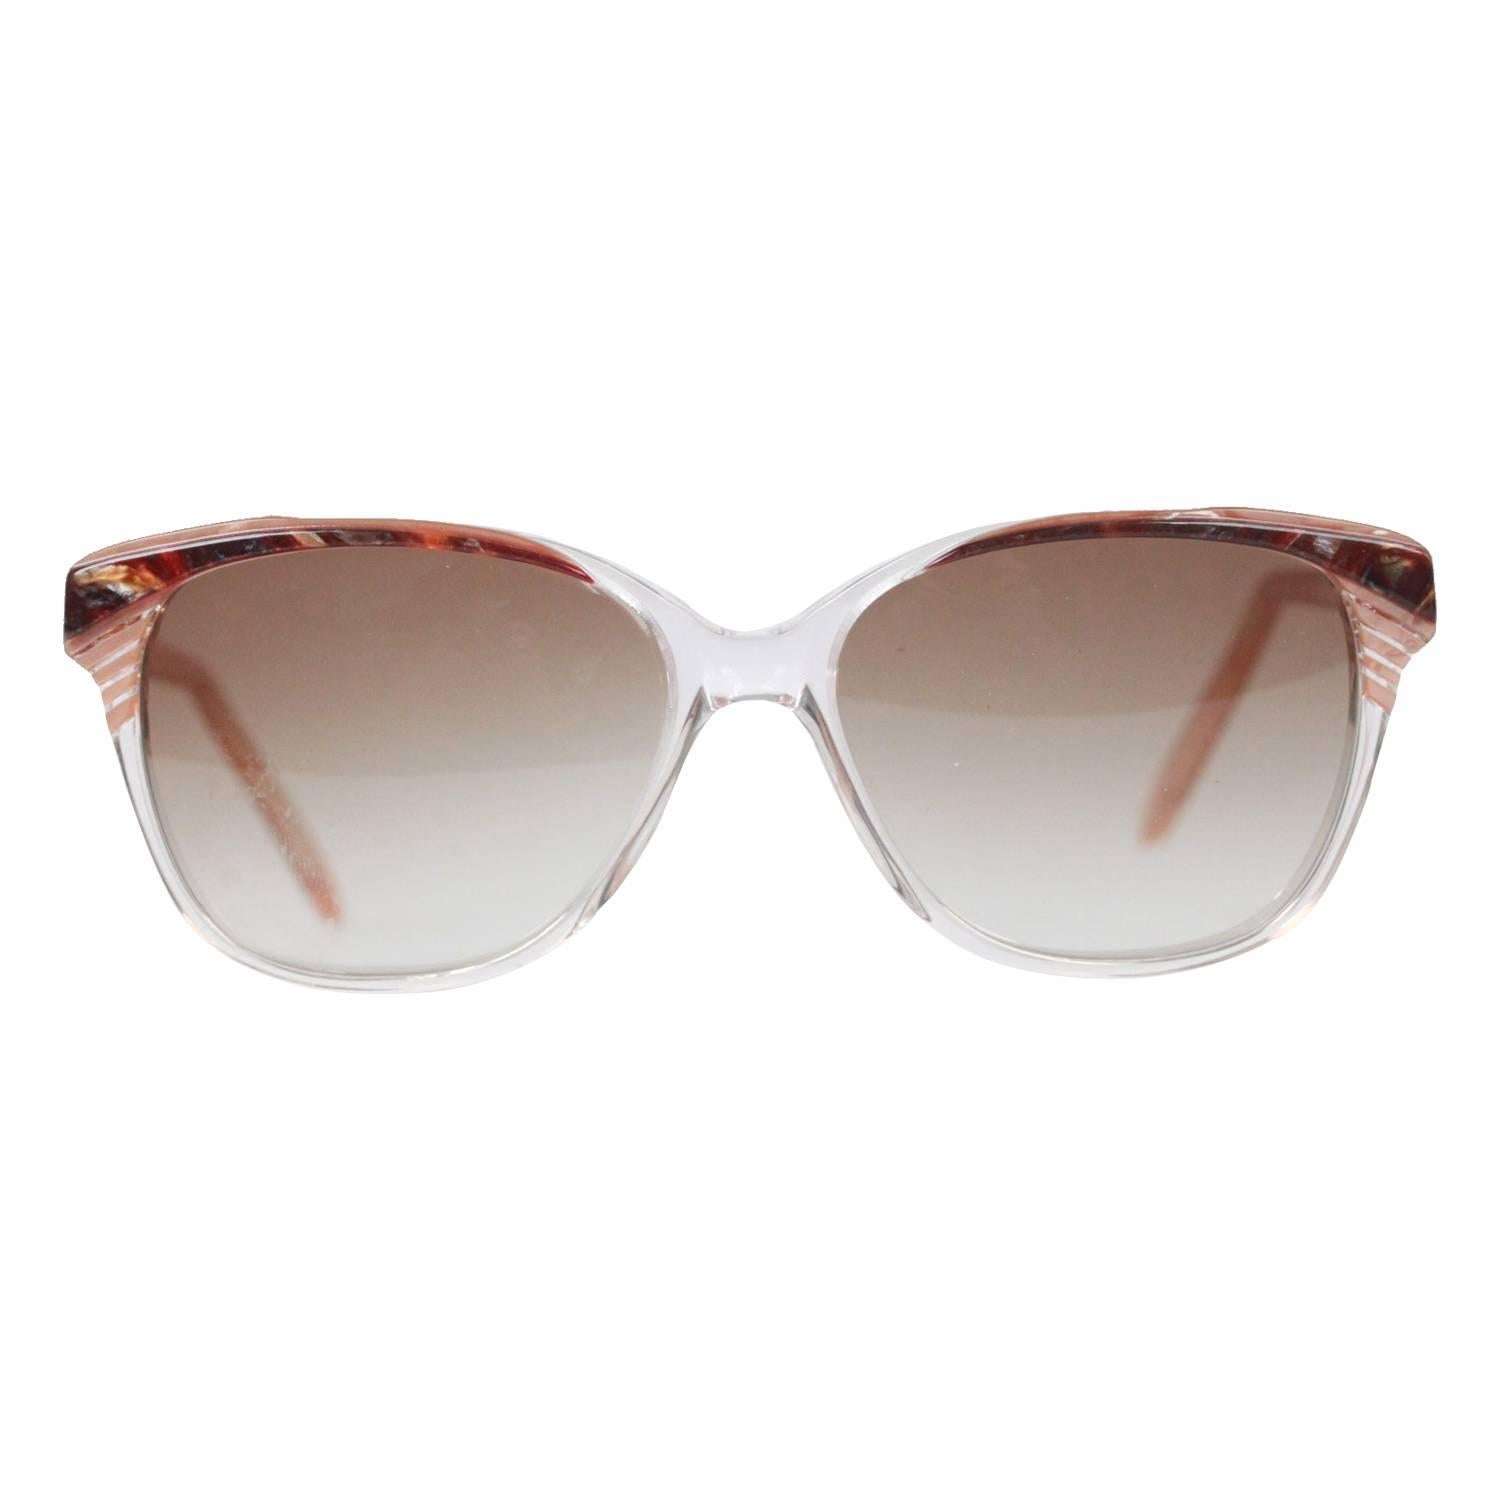 Yves Saint Laurent Vintage Sunglasses Sophocle 783 54mm Frame France